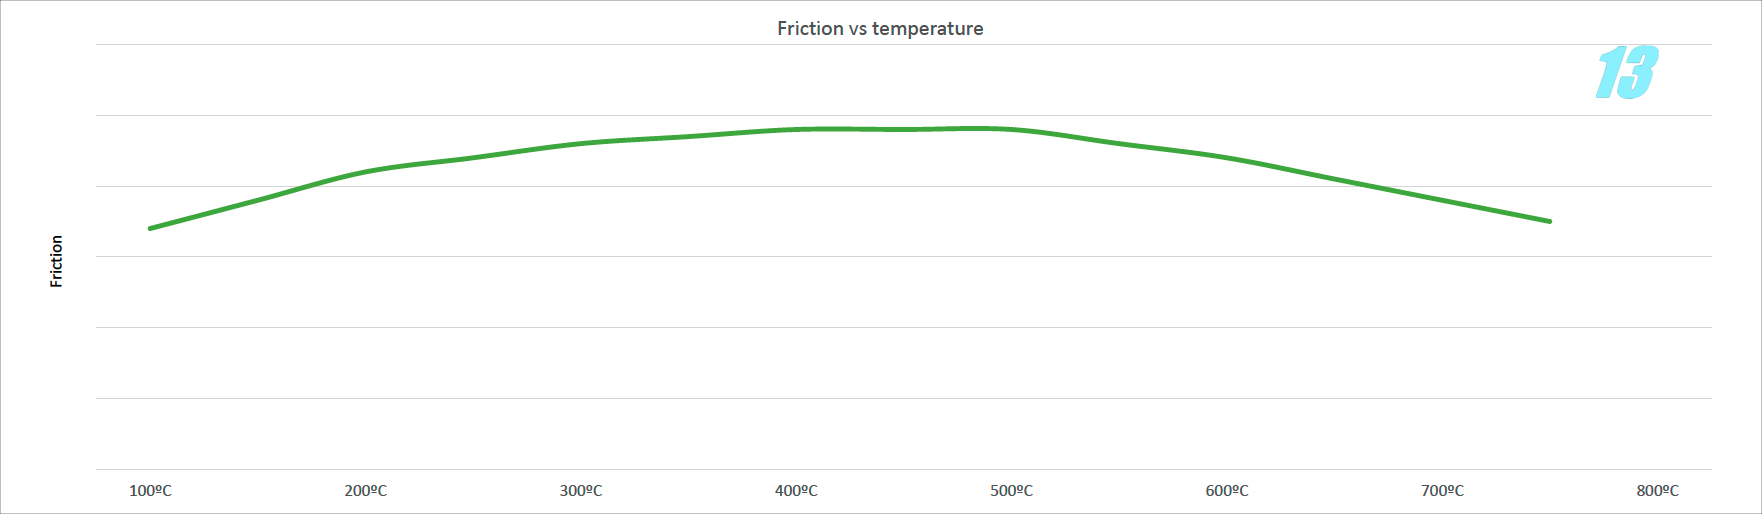 PFC 13 Compound Friction Vs Temperature